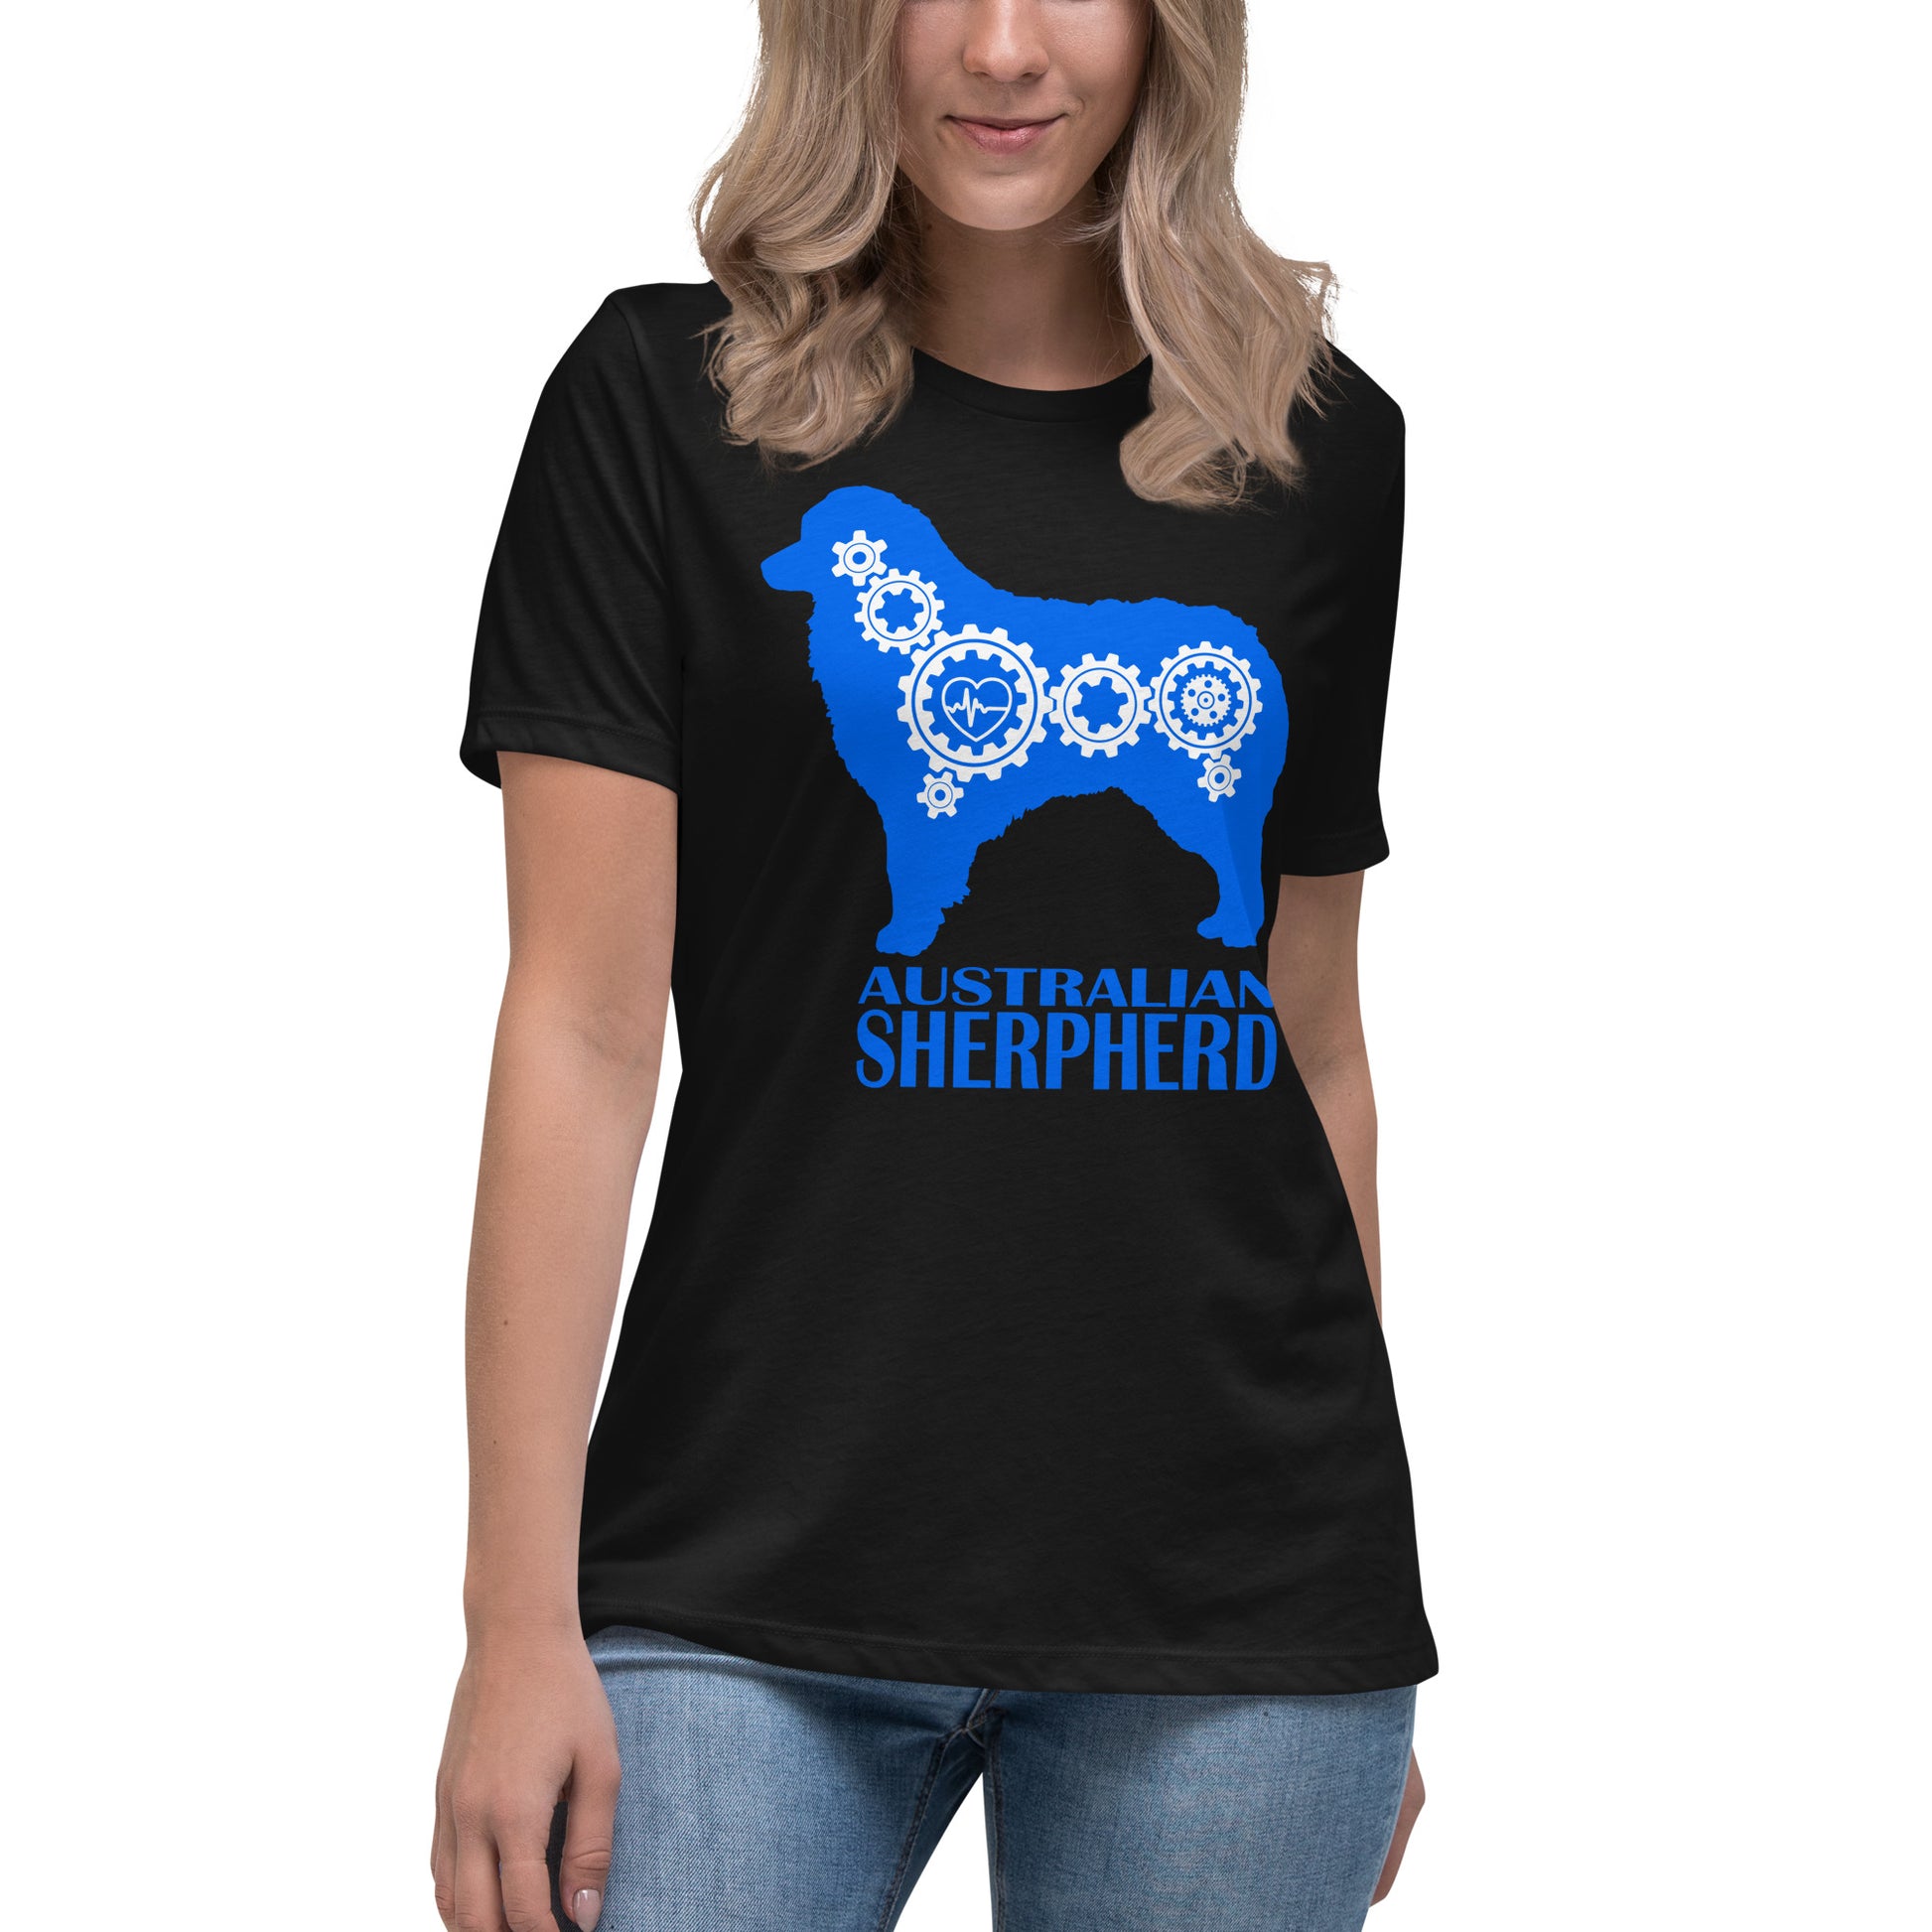 Australian Shepherd Bionic women’s black t-shirt by Dog Artistry.